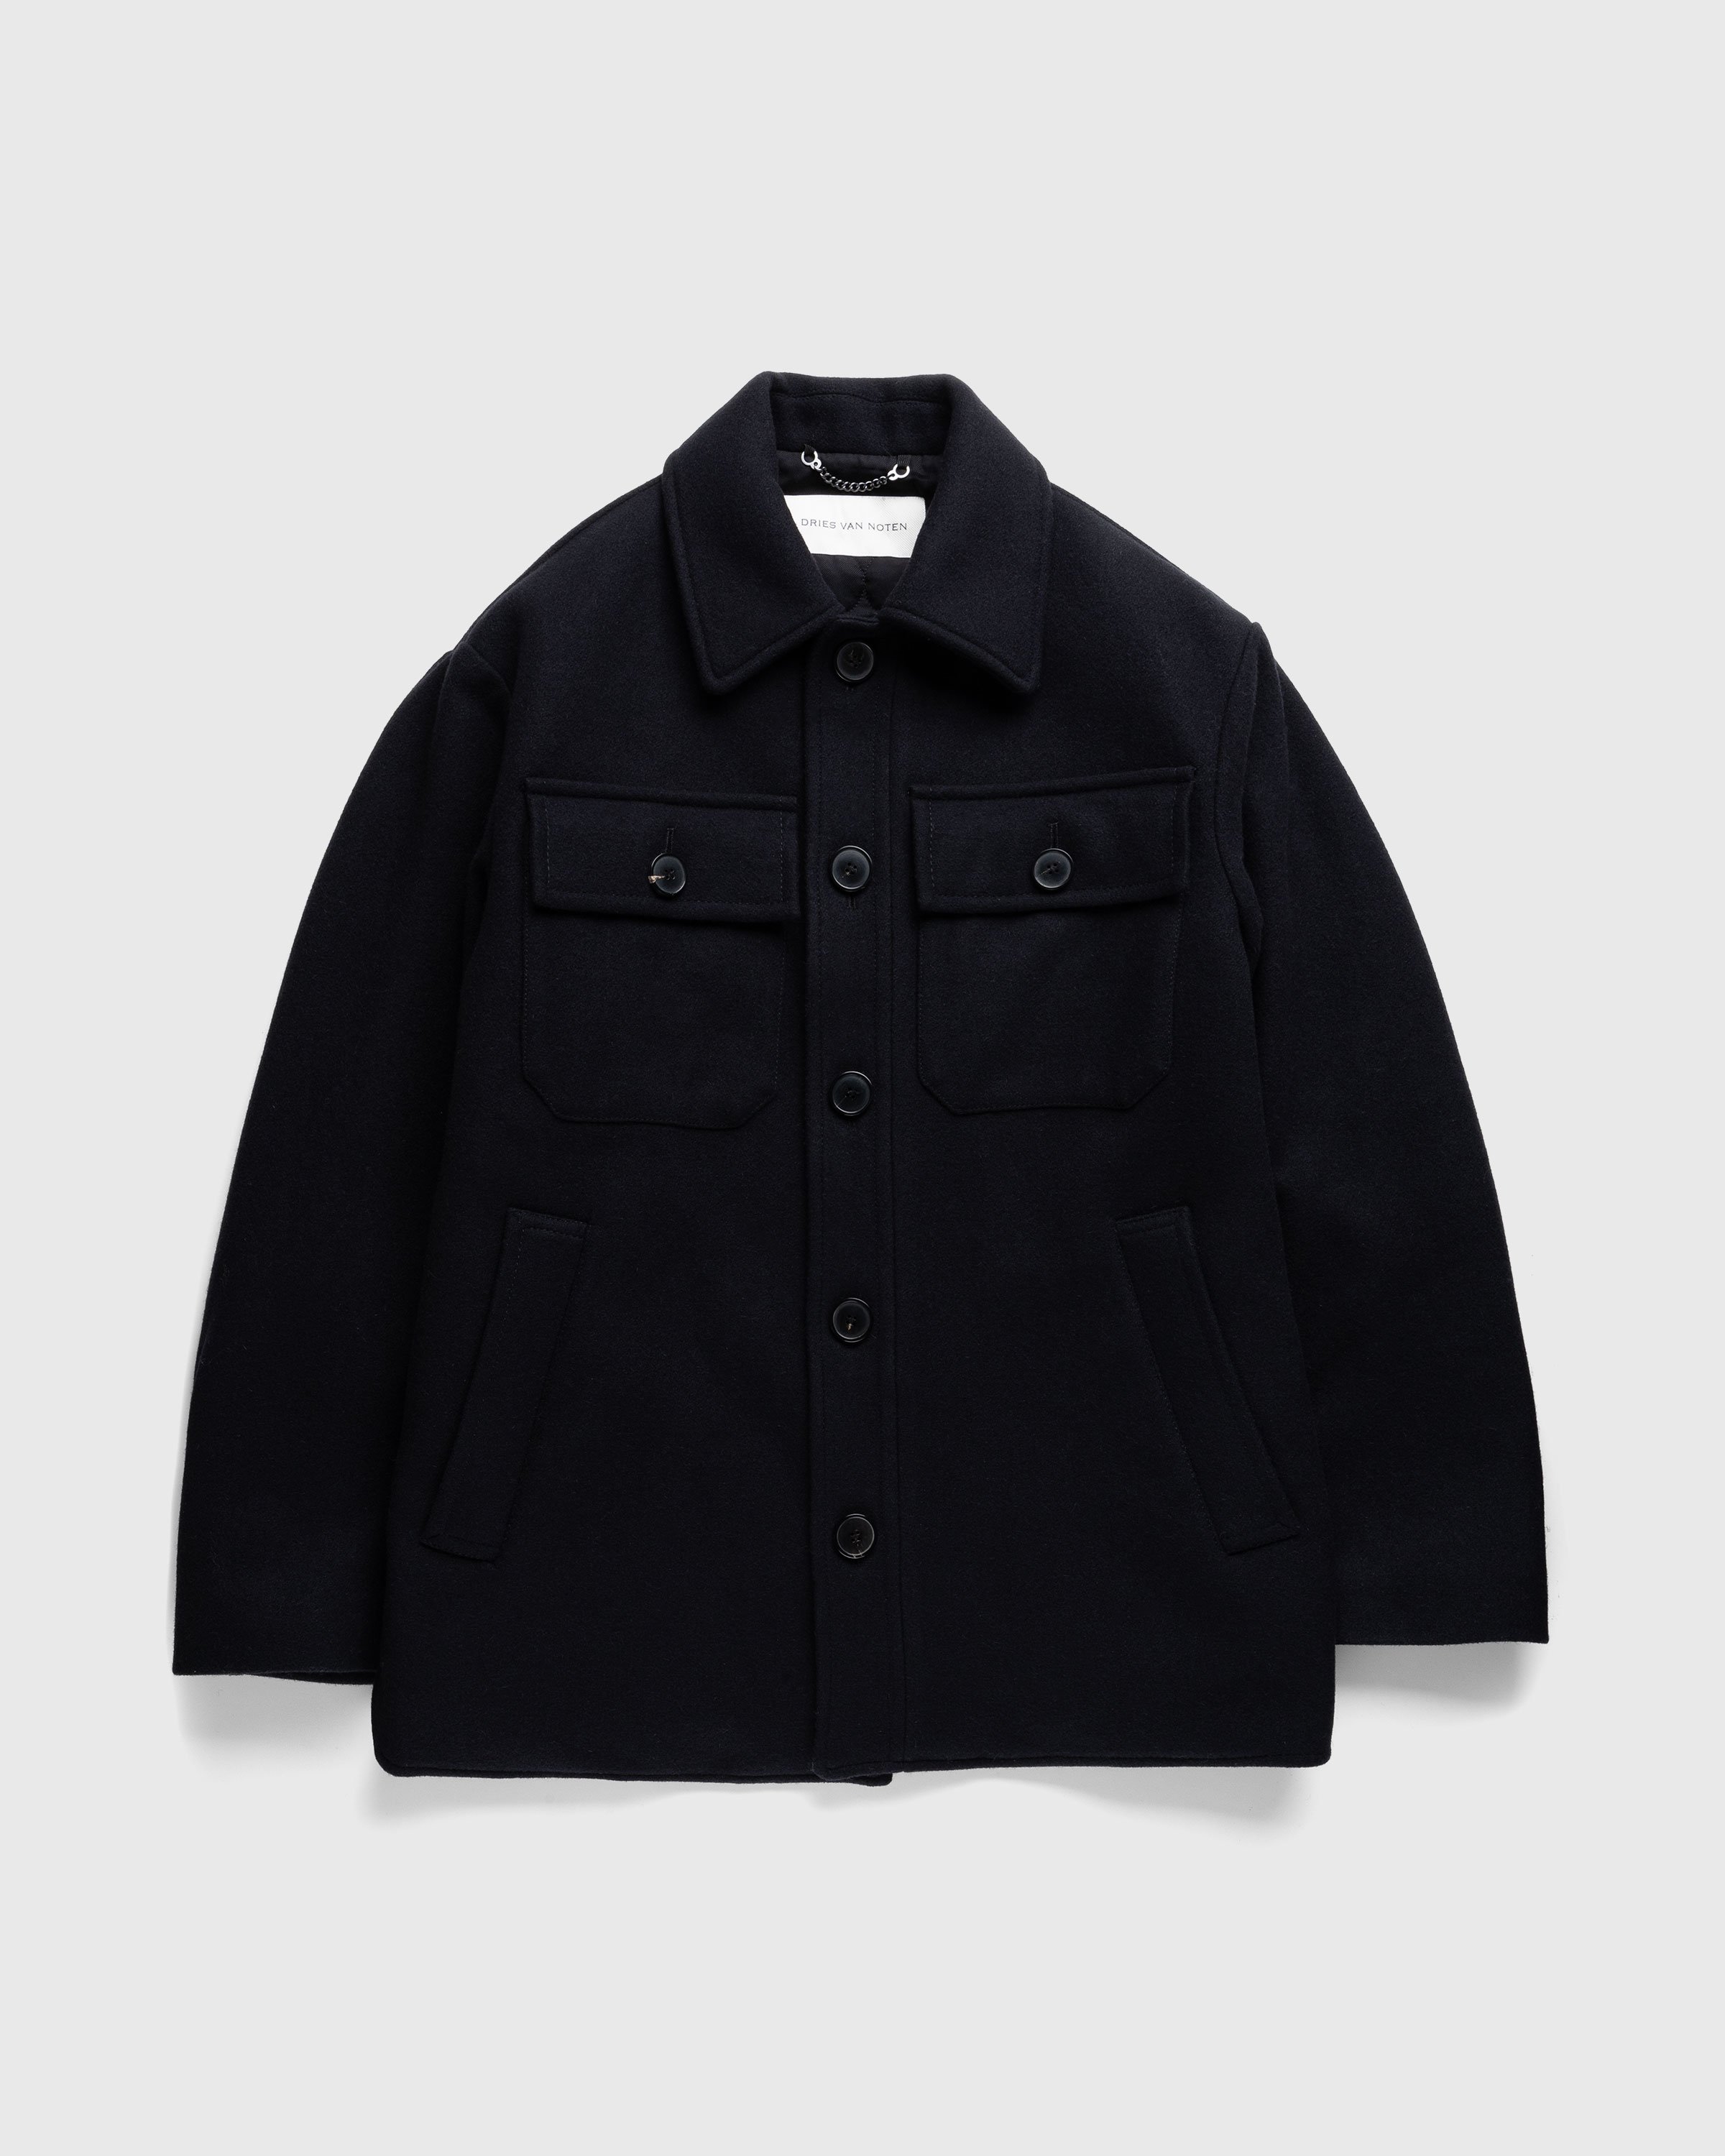 Dries van Noten - Valko Jacket Black - Clothing - Black - Image 1